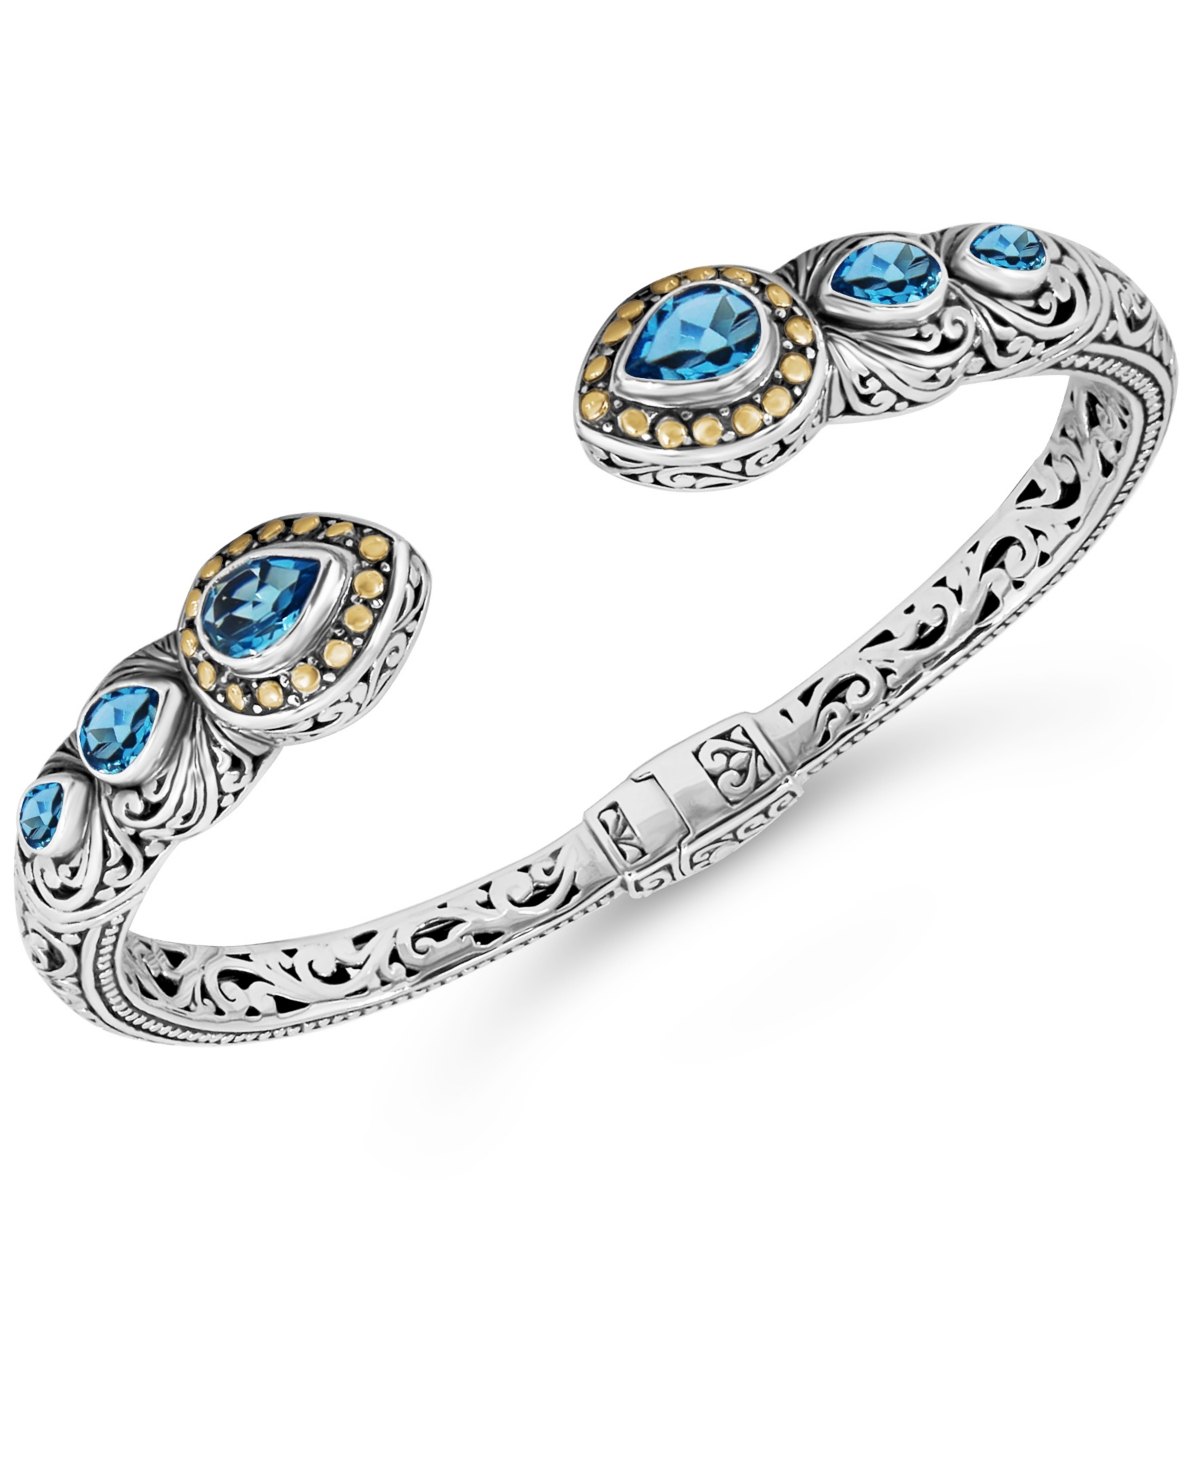 Blue Topaz & Bali Filigree Cuff Bracelet in Sterling Silver and 18K Gold - Blue topaz